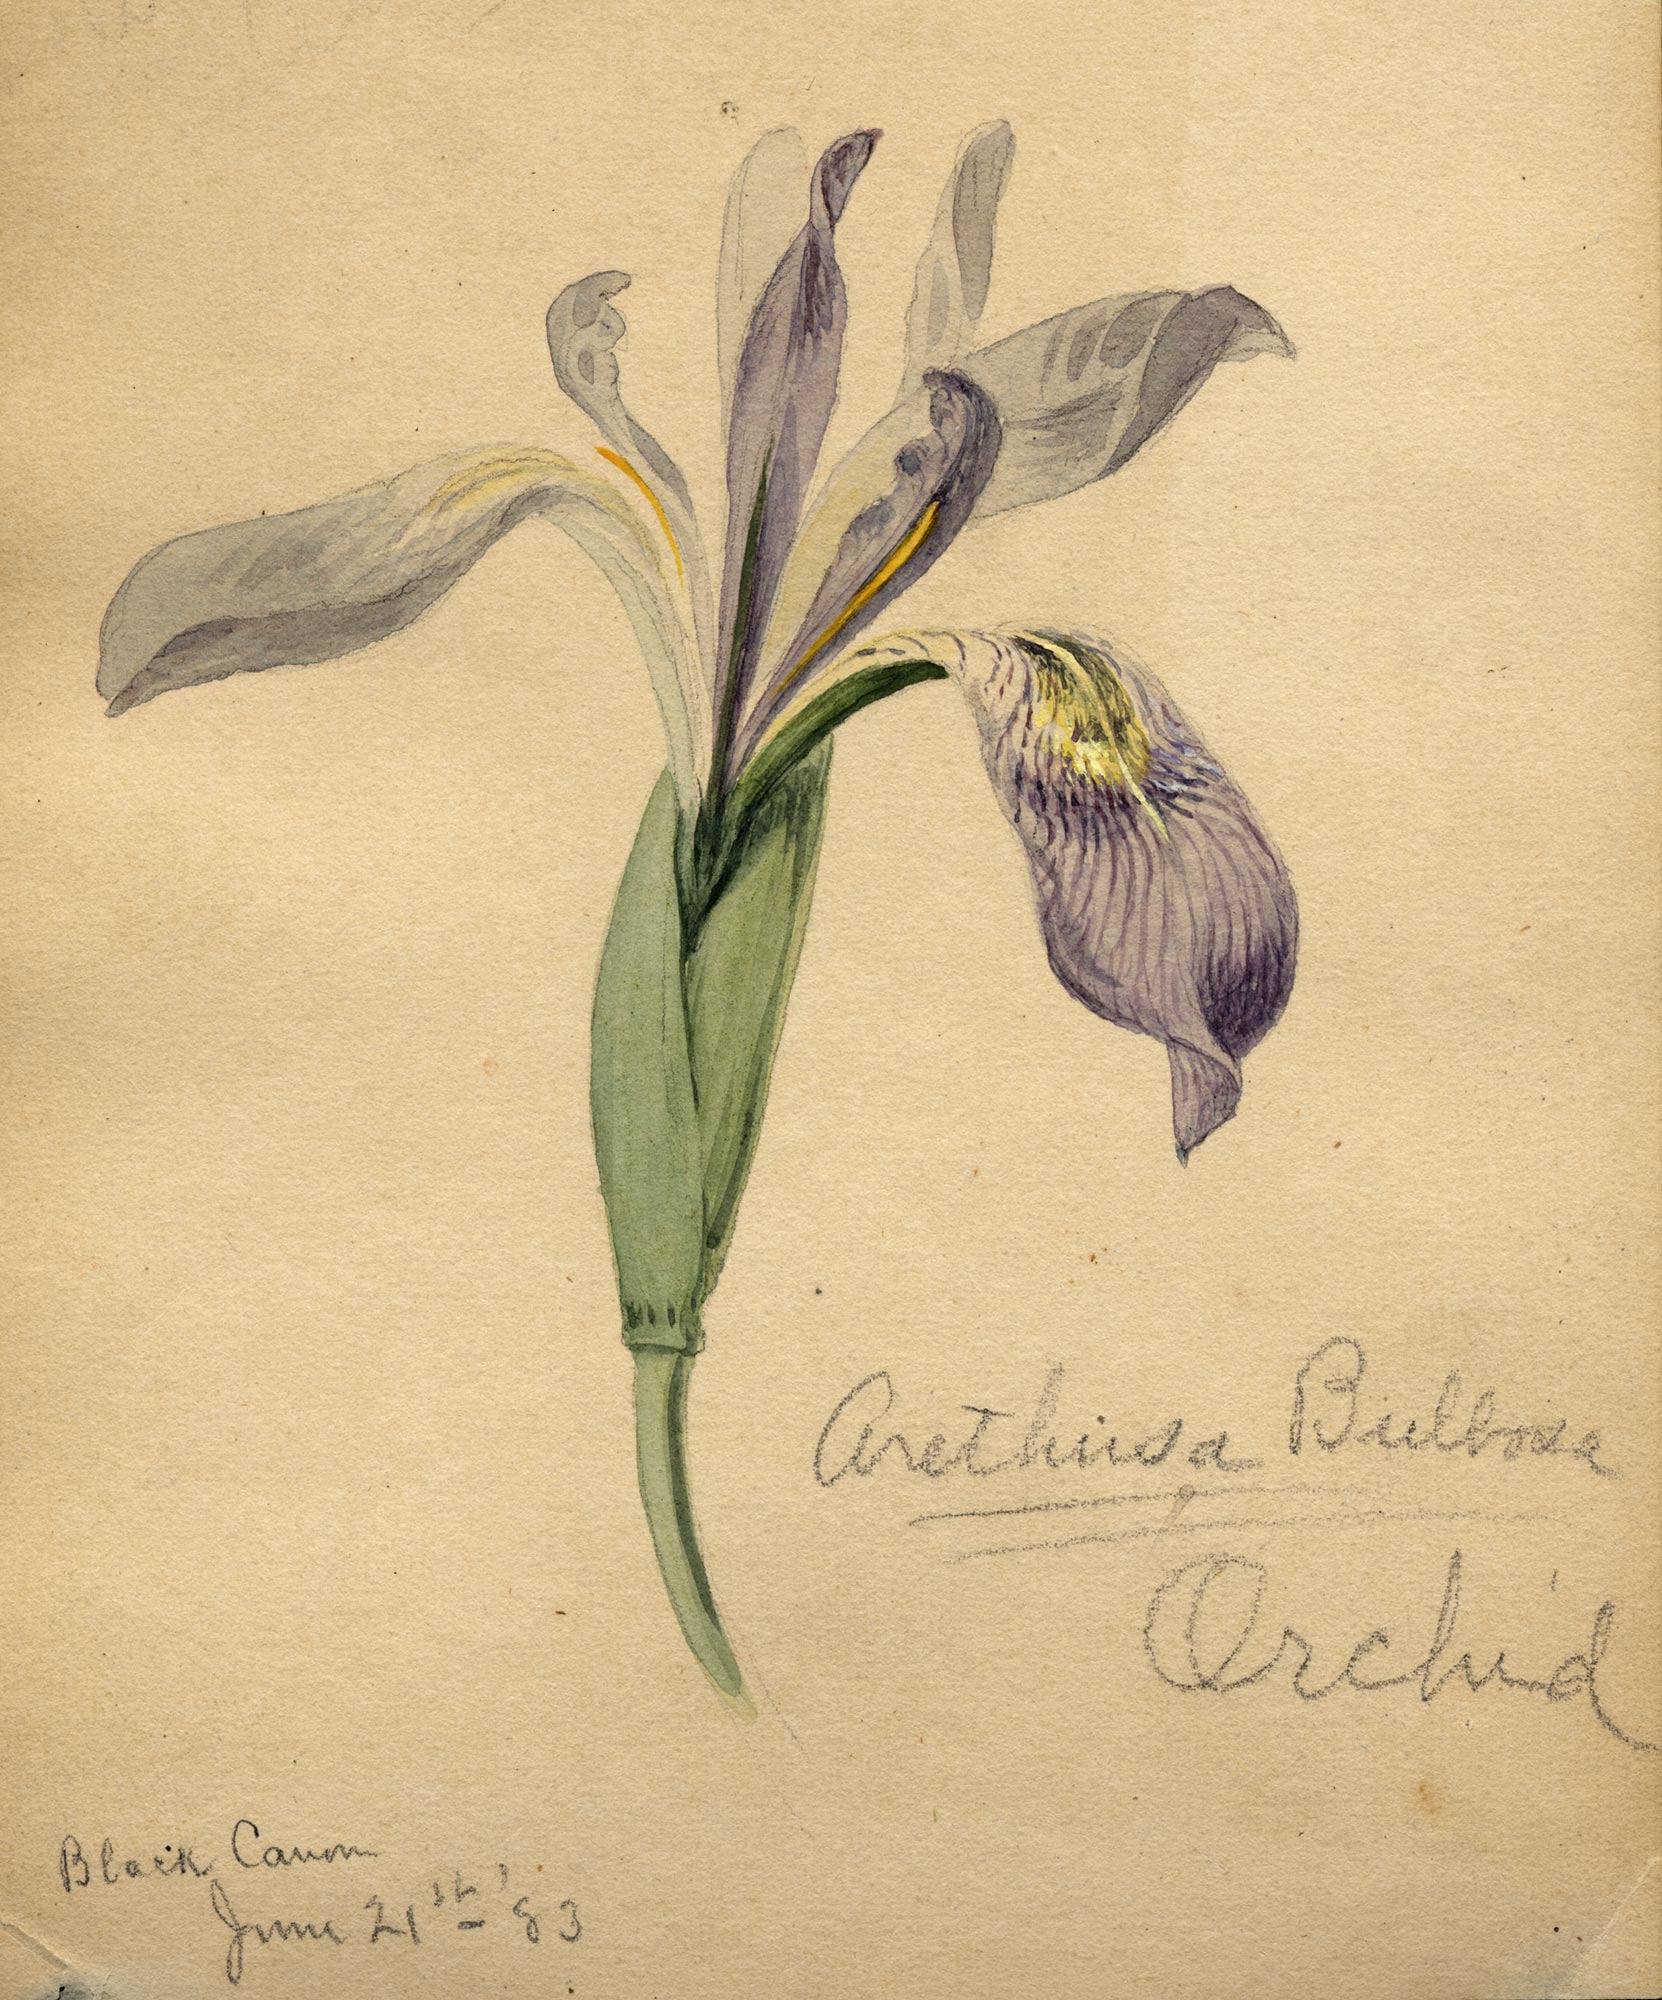 Aresthisa buldosa / Orchid